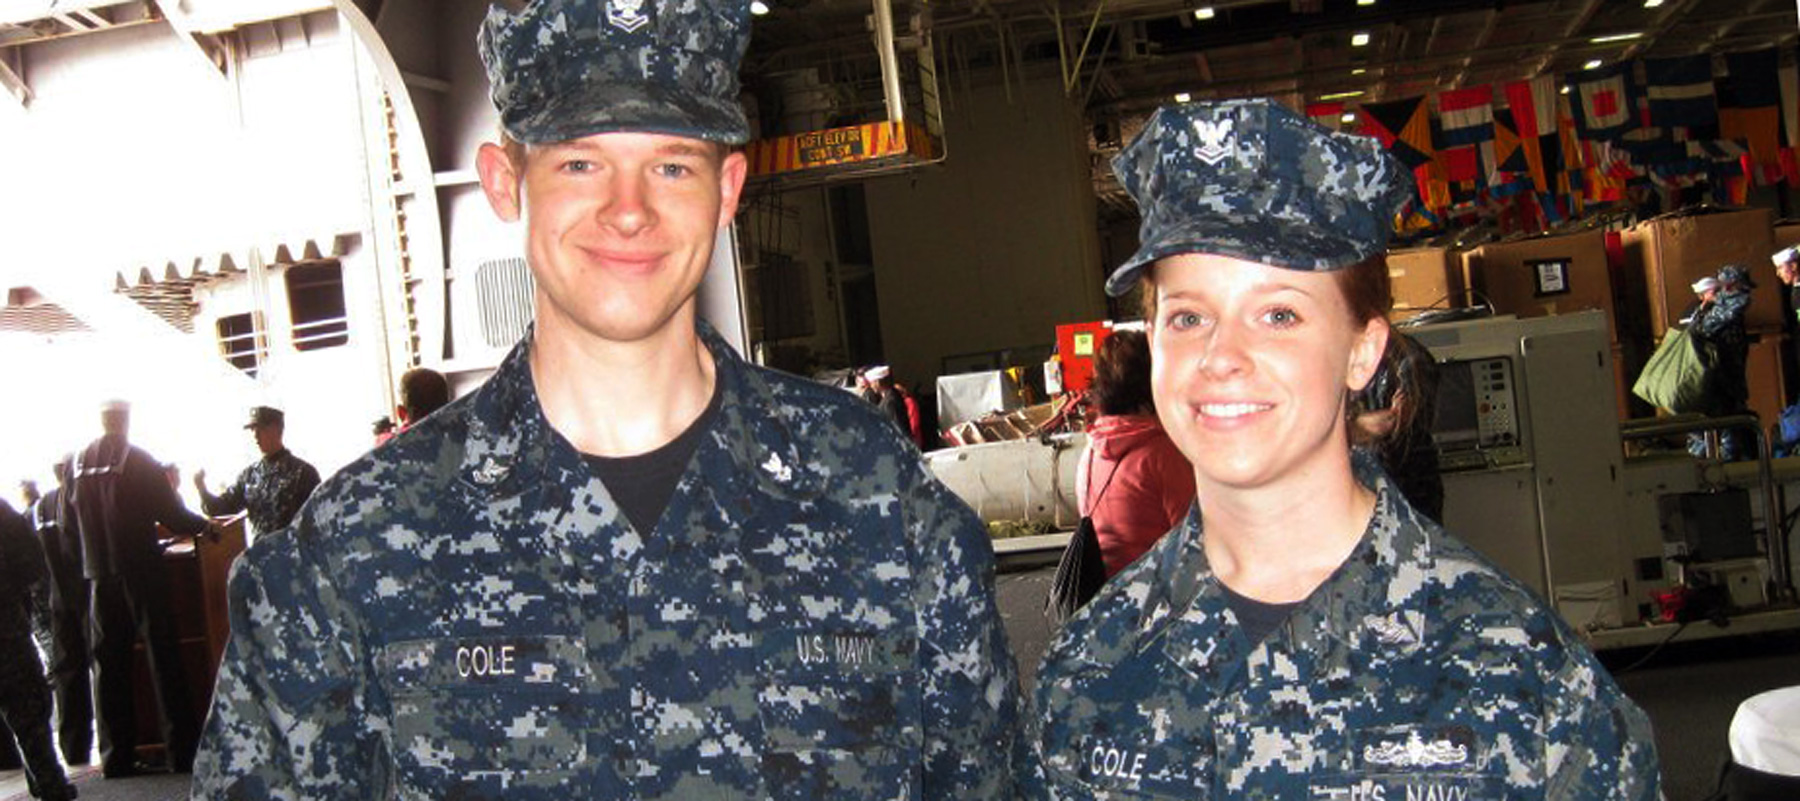 Jamie Rangel wearing a U.S. Navy uniform and smiling